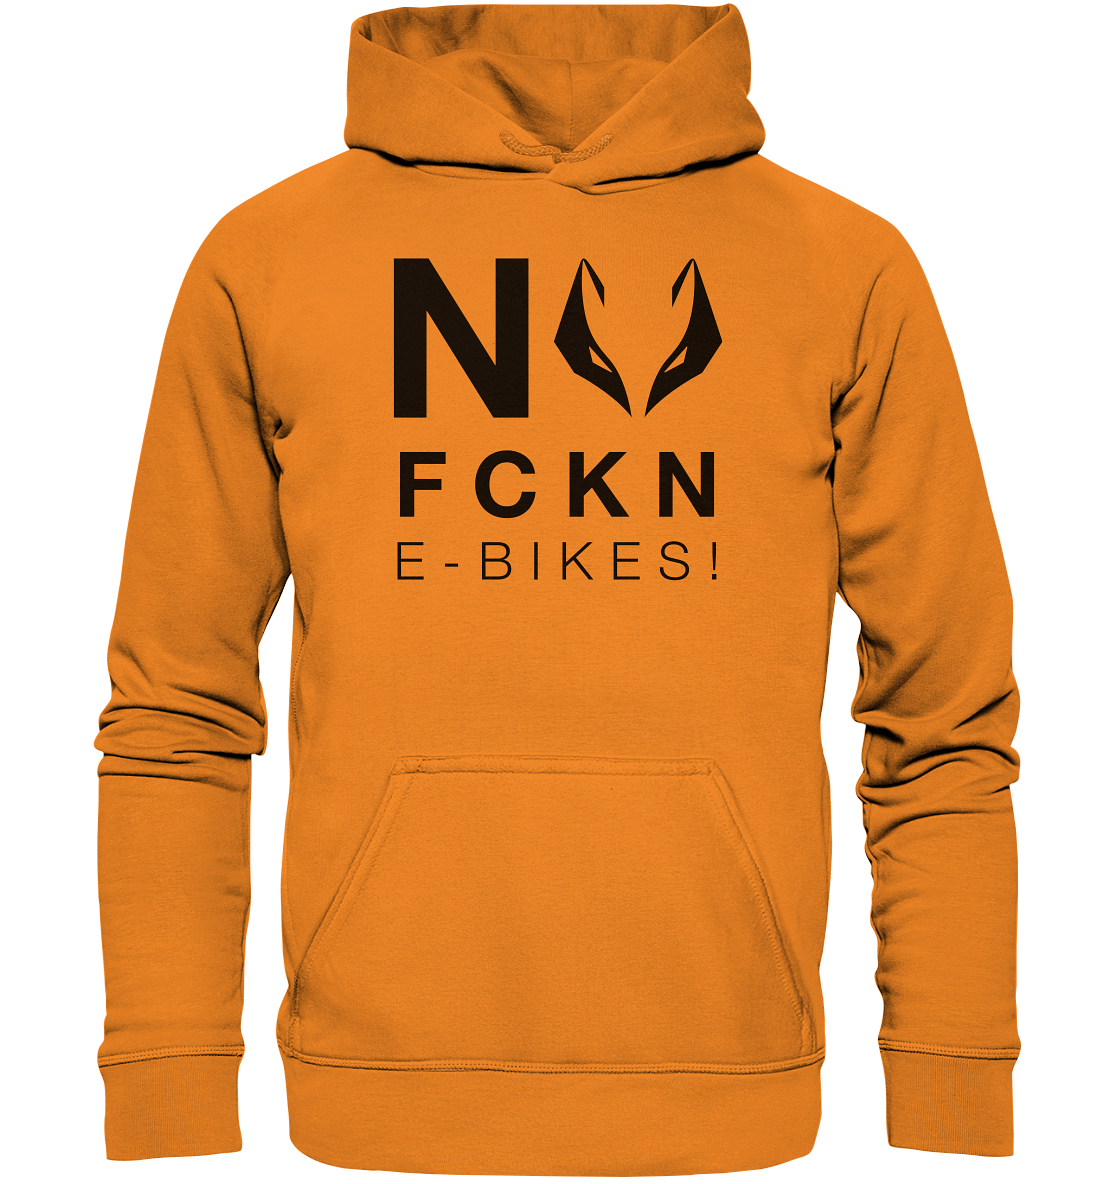 NO FCKN E-BIKES - Classic Unisex Hoodie